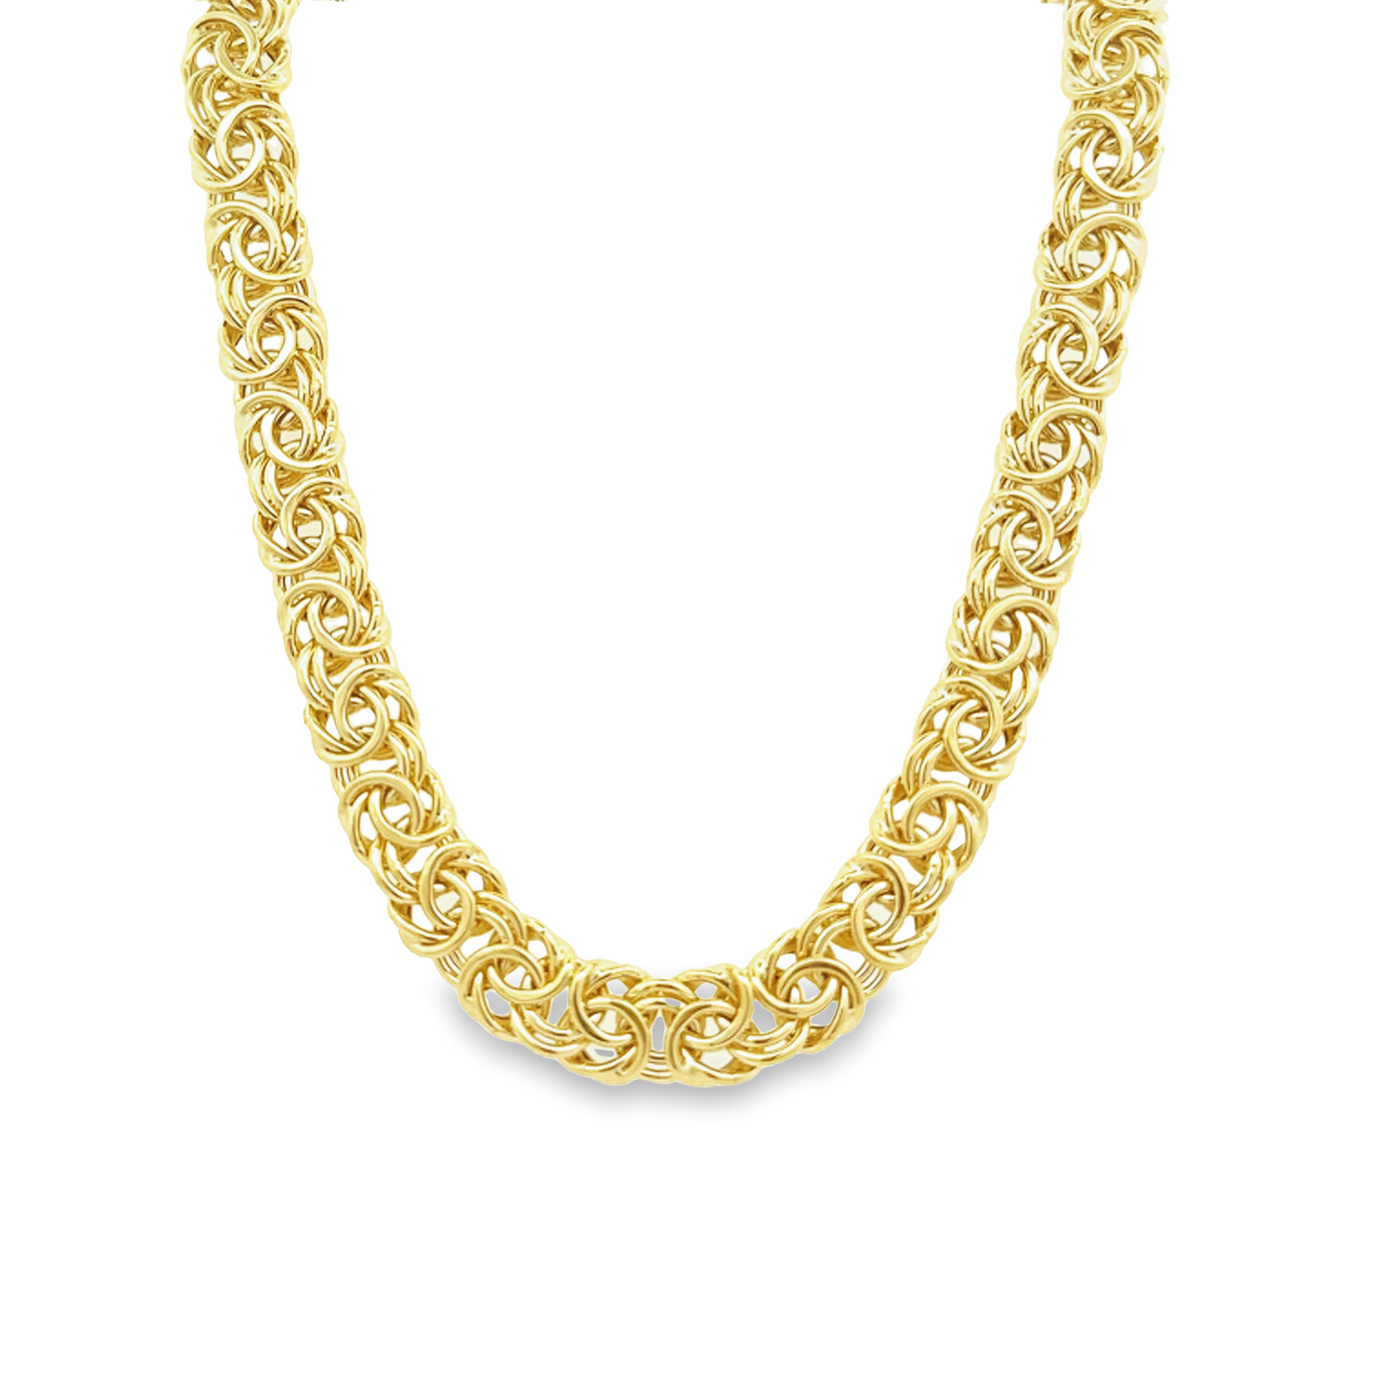 10 Karat Yellow Gold Weaved Link Necklace